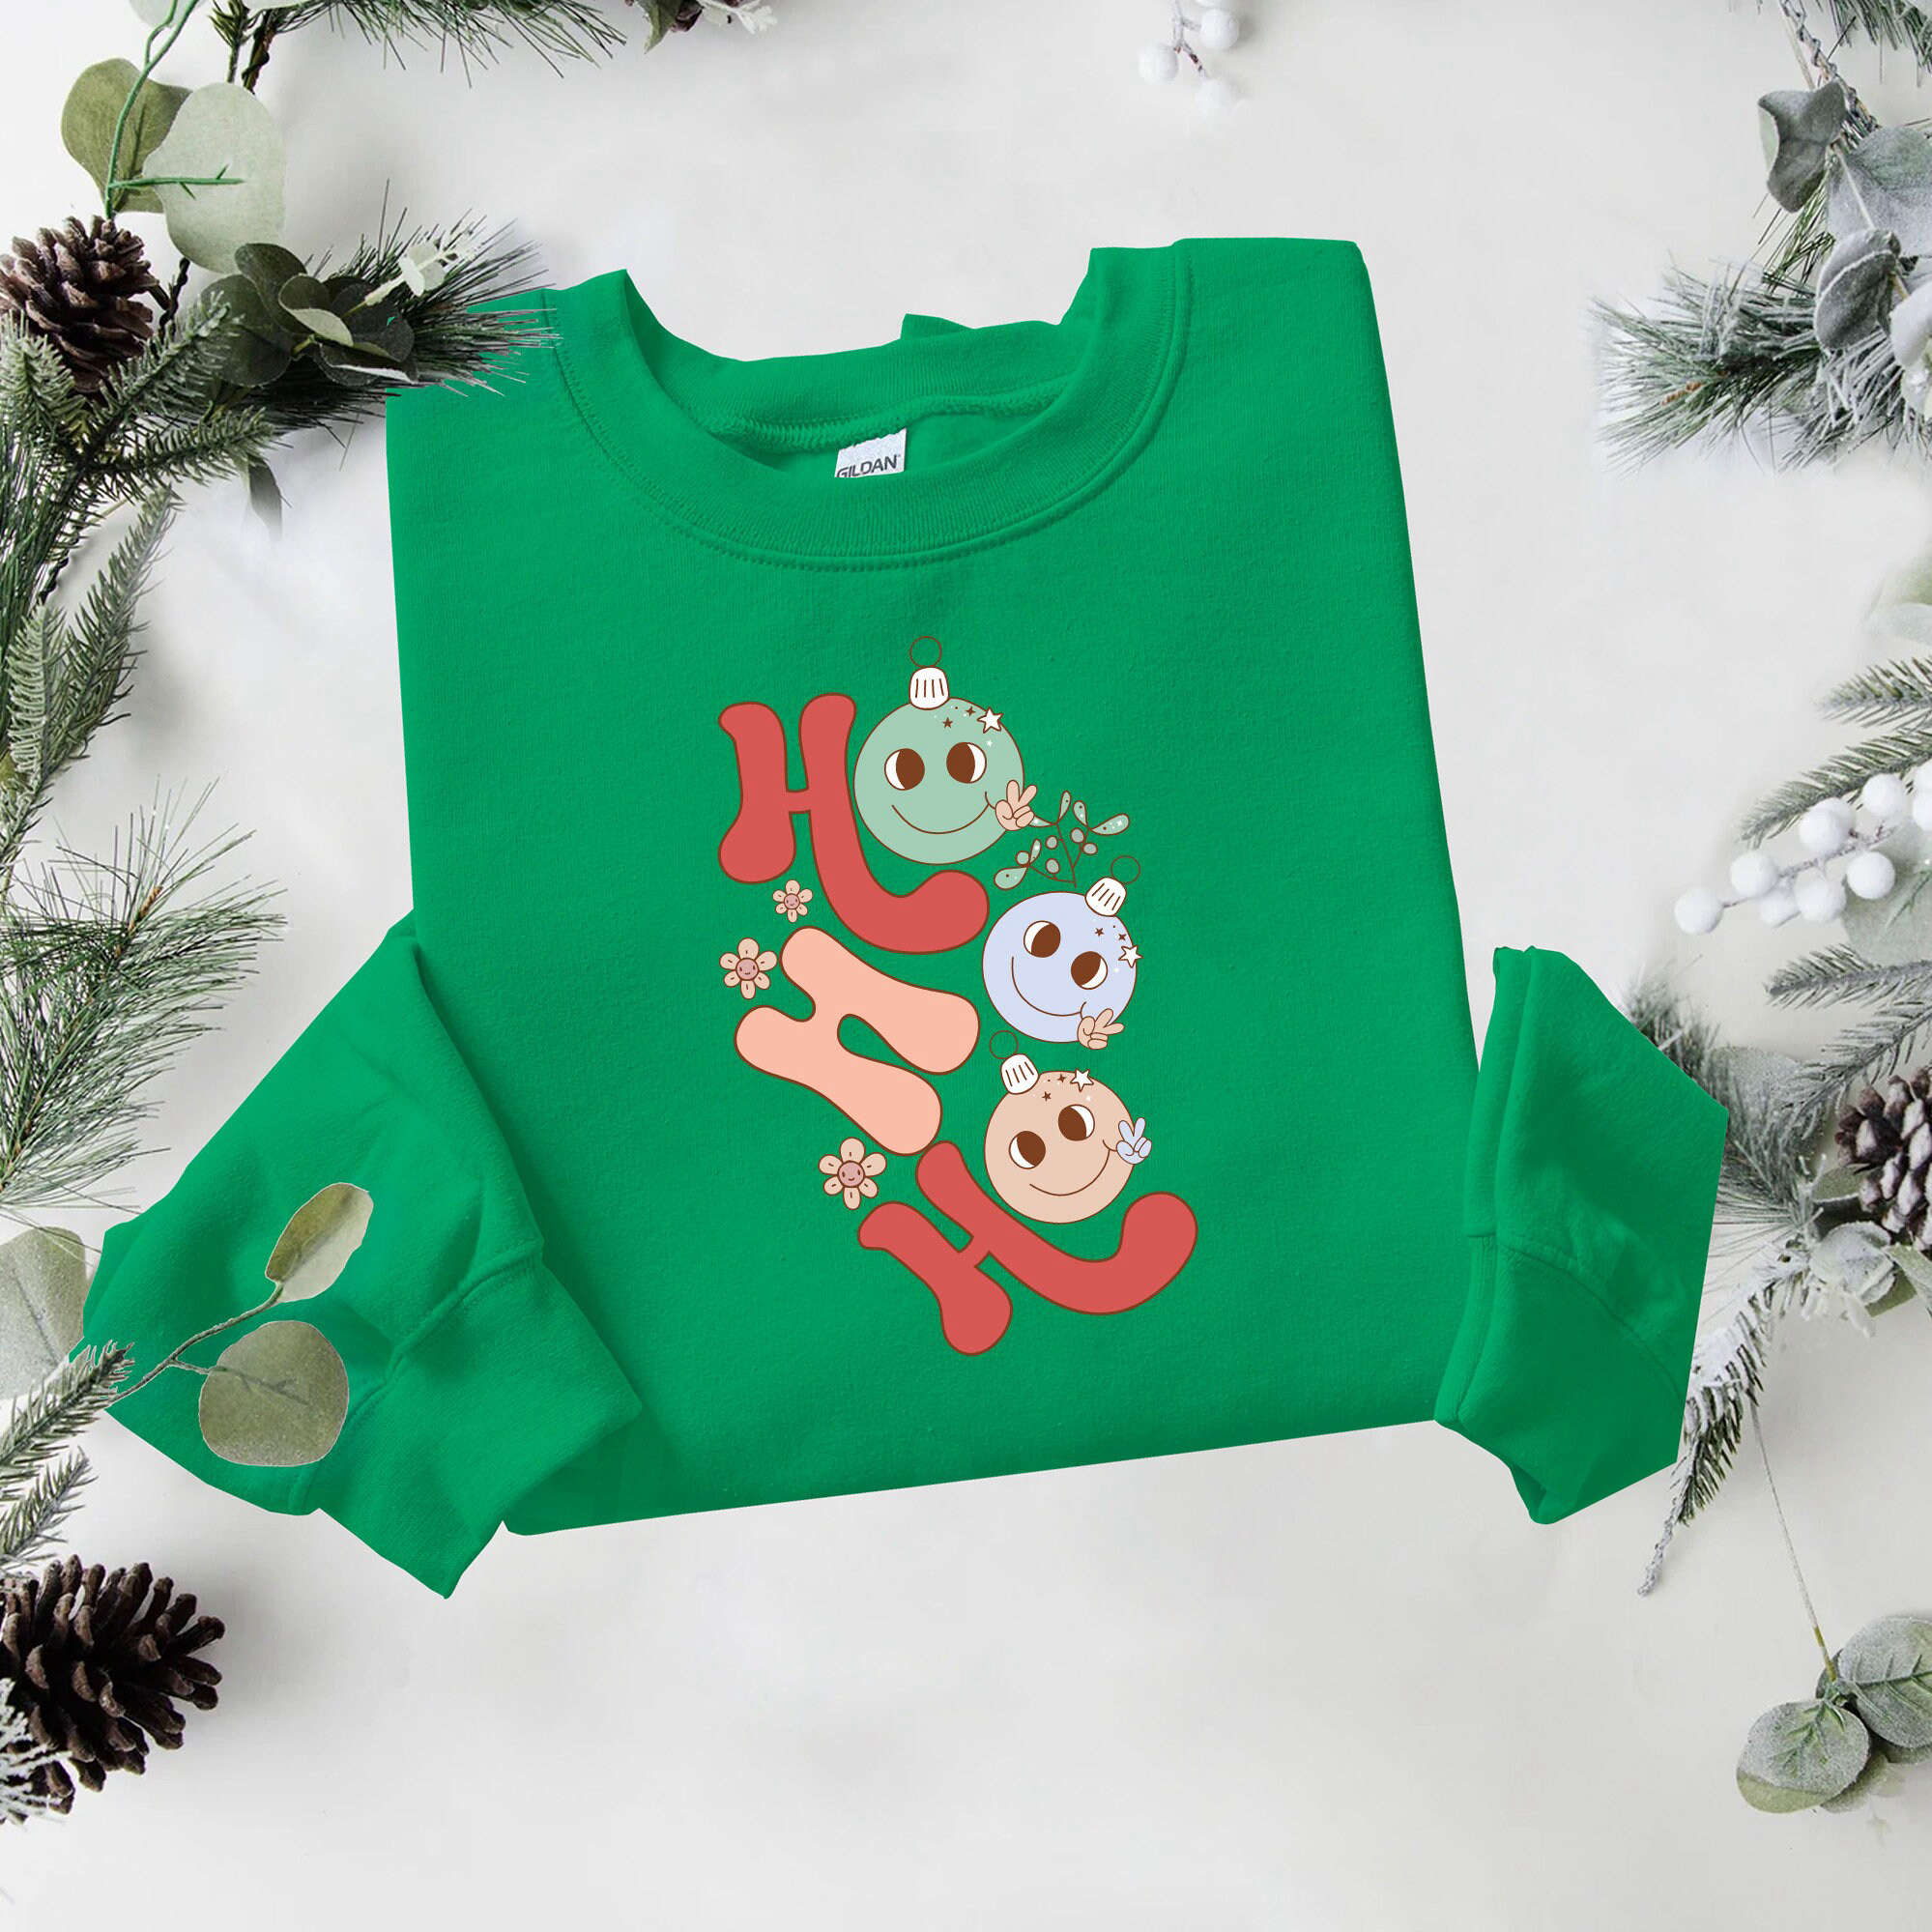 HoHoHo Christmas Shirt, Christmas Sweatshirt, Womens Christmas Shirt, Christmas Gift, Christmas Sweater, Holiday Retro Sw eatshirt, Vintage